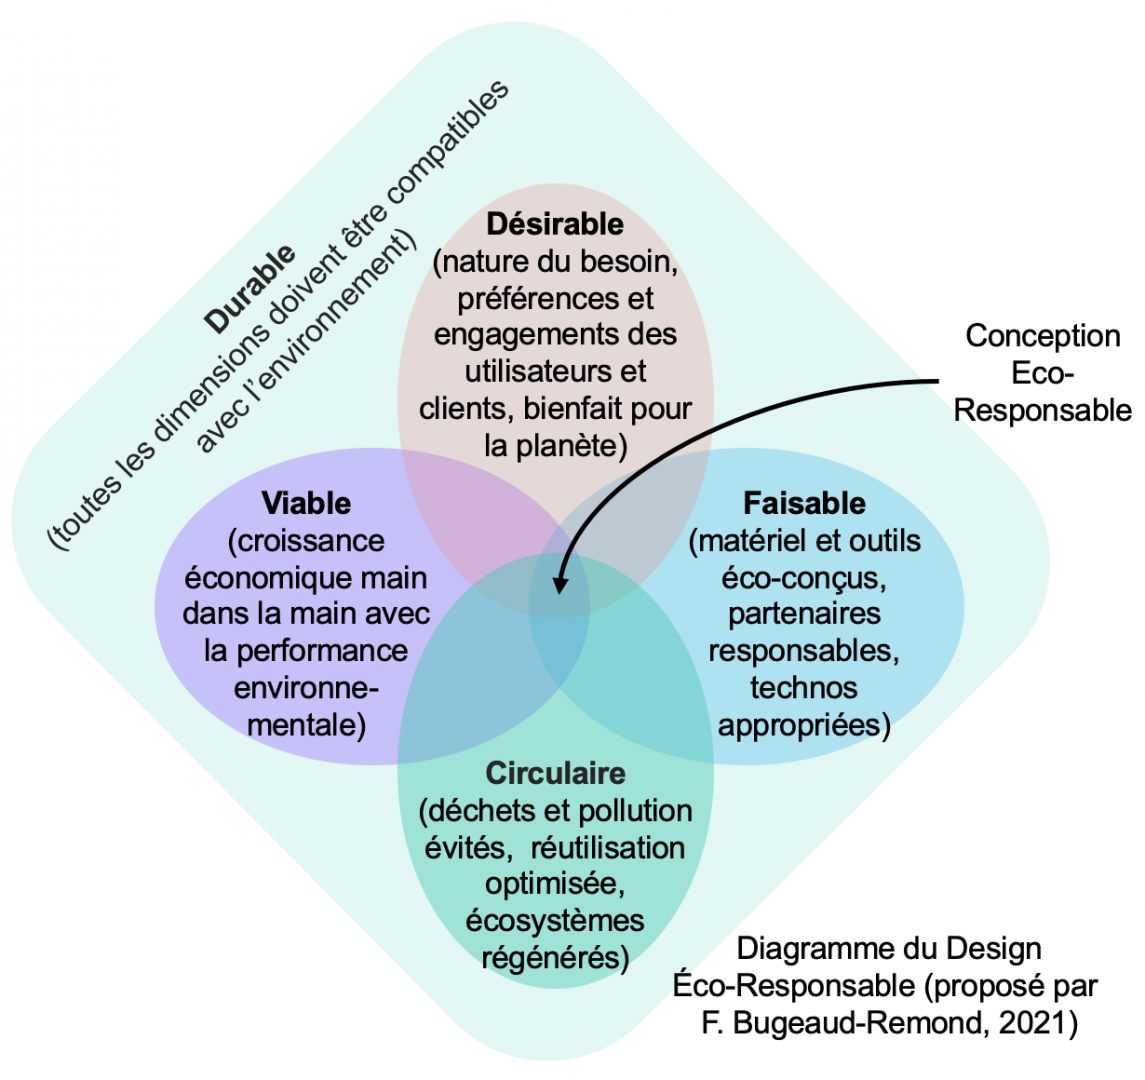 Diagramme du Design Eco-Responsable / Eco-responsible Design Diagram